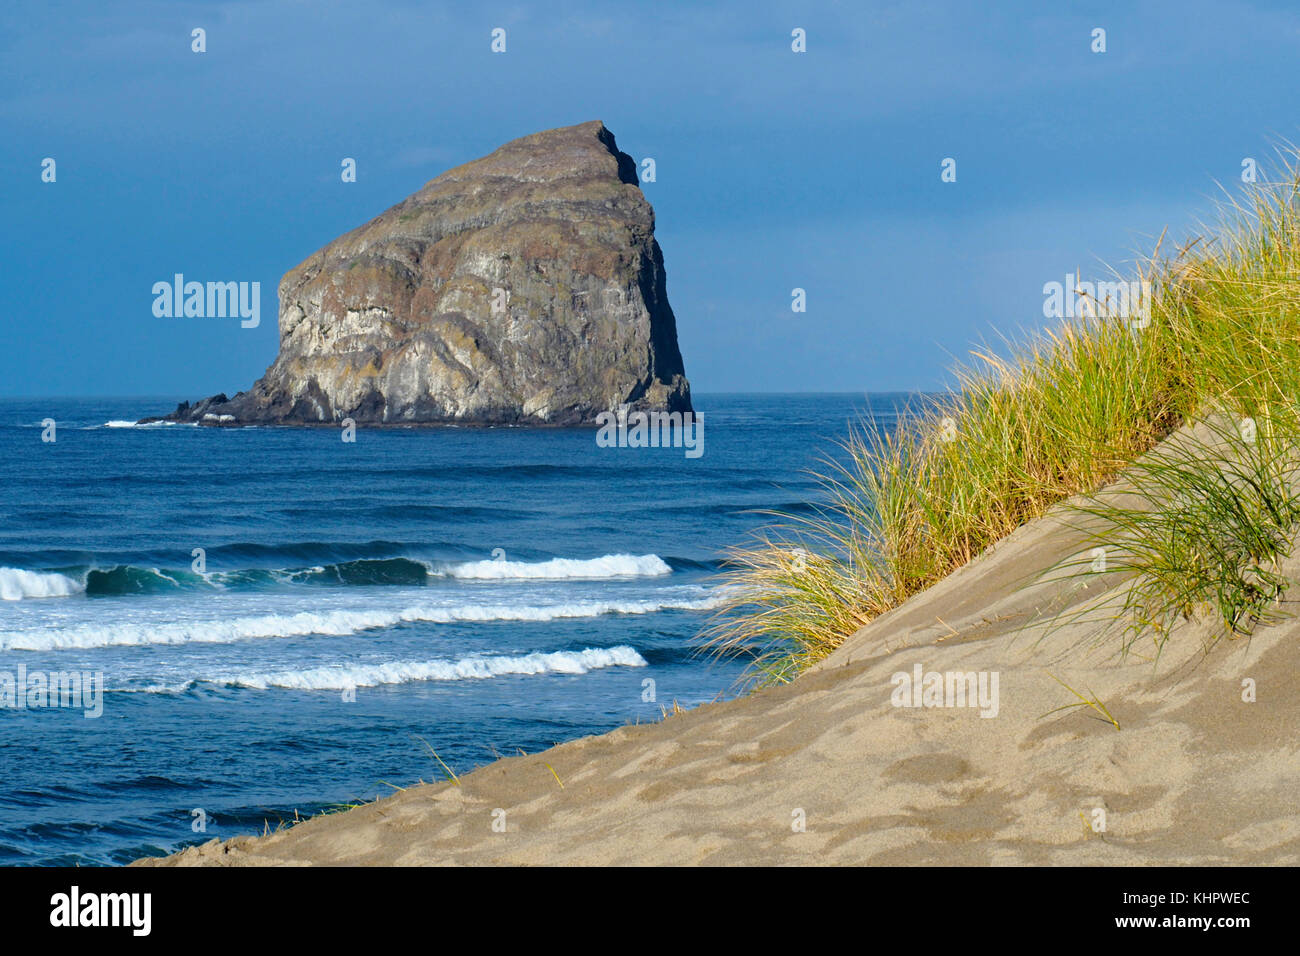 Strand und Dünen auf Cape Kiwanda bei Pacific City wih große Meer stack Rock Formation (Heuhaufen oder Chief kiawanda Rock) Offshore. Stockfoto